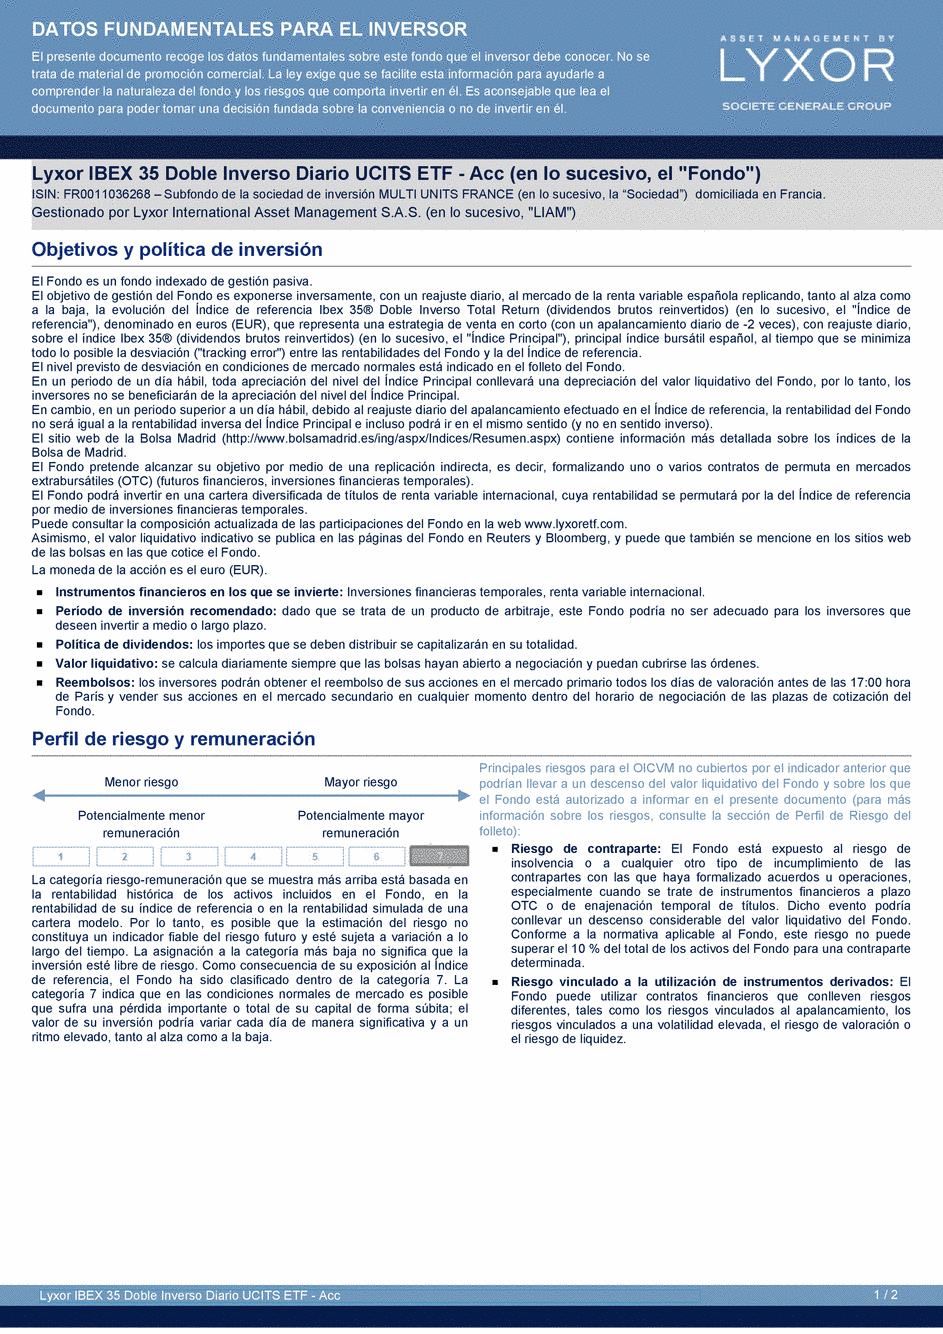 DICI Lyxor IBEX 35 Doble Inverso Diario UCITS ETF - Acc - 19/02/2021 - Espagnol